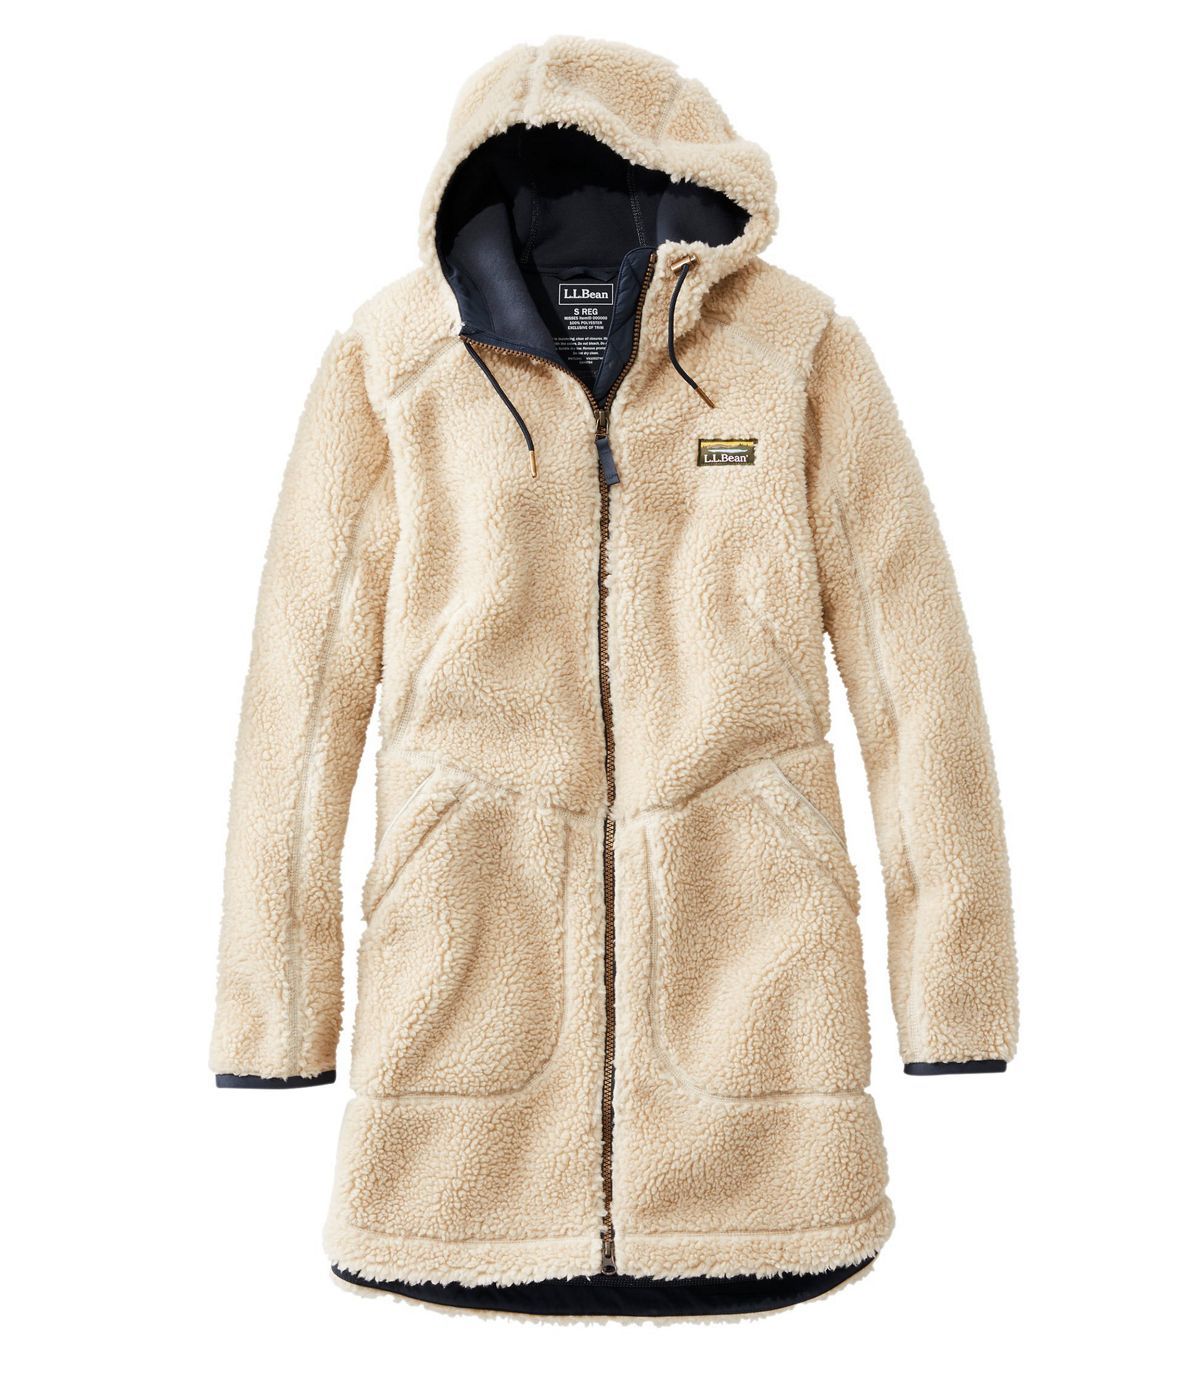 Women Coats Beautyfine Outwear Quilted Winter Warm Faux Fur Collar Hooded Jacket Tops with Belt